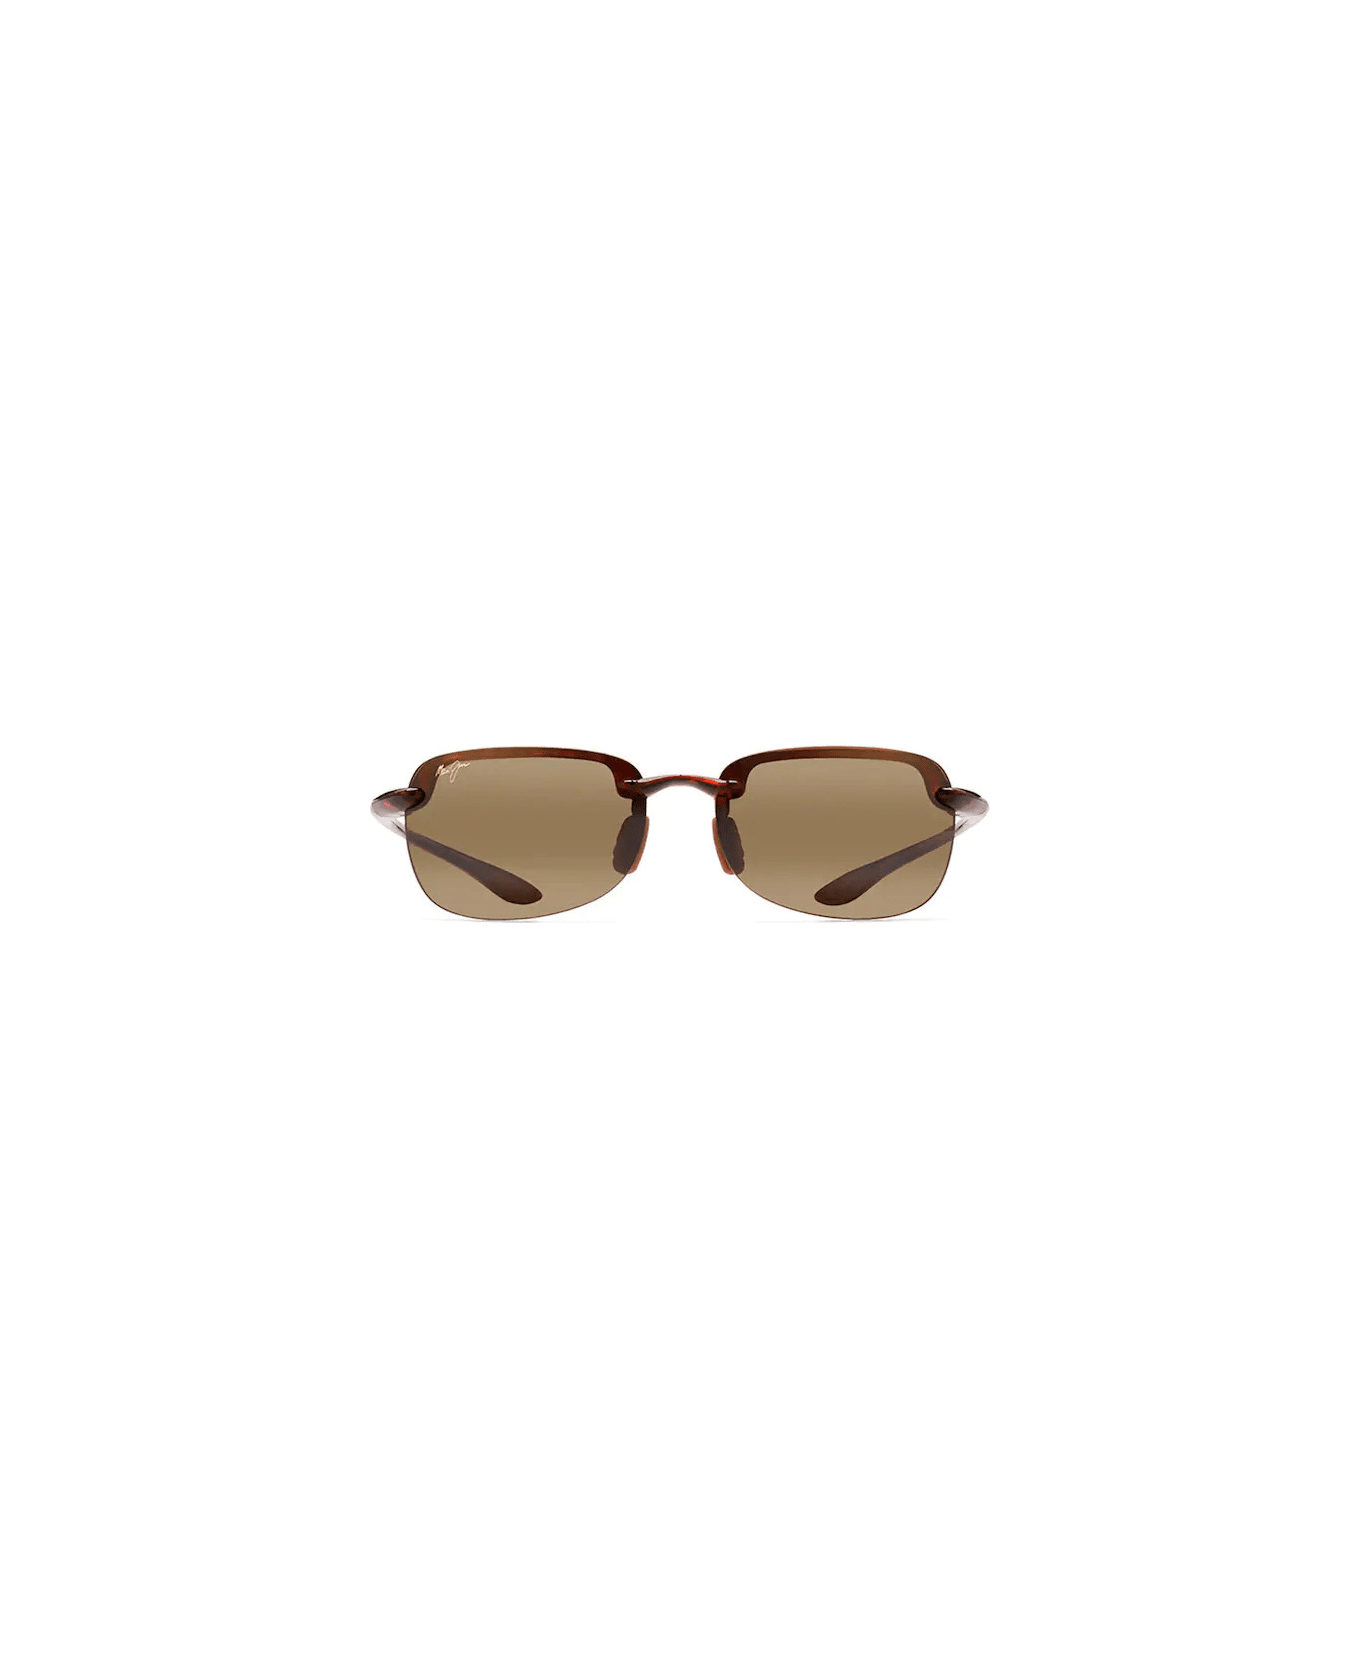 Maui Jim MJ412-10 Sunglasses - Marrone lenti bronzo